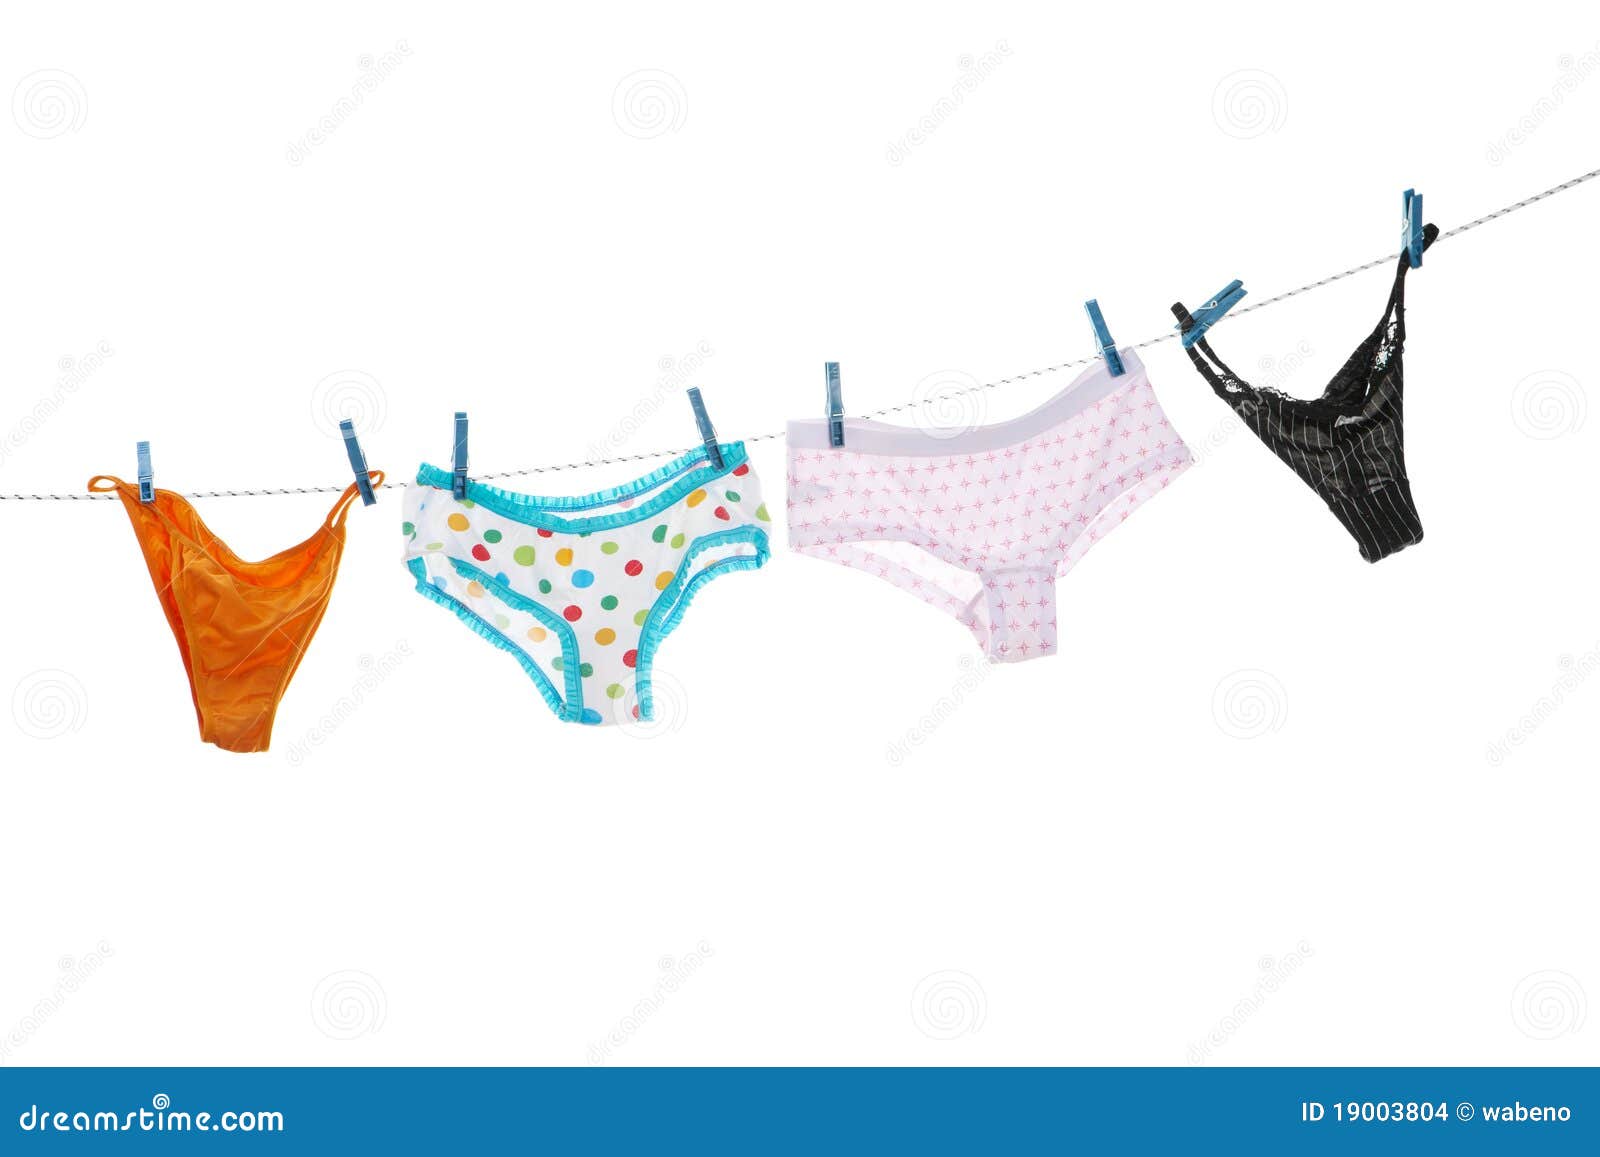 long underwear clipart - photo #43